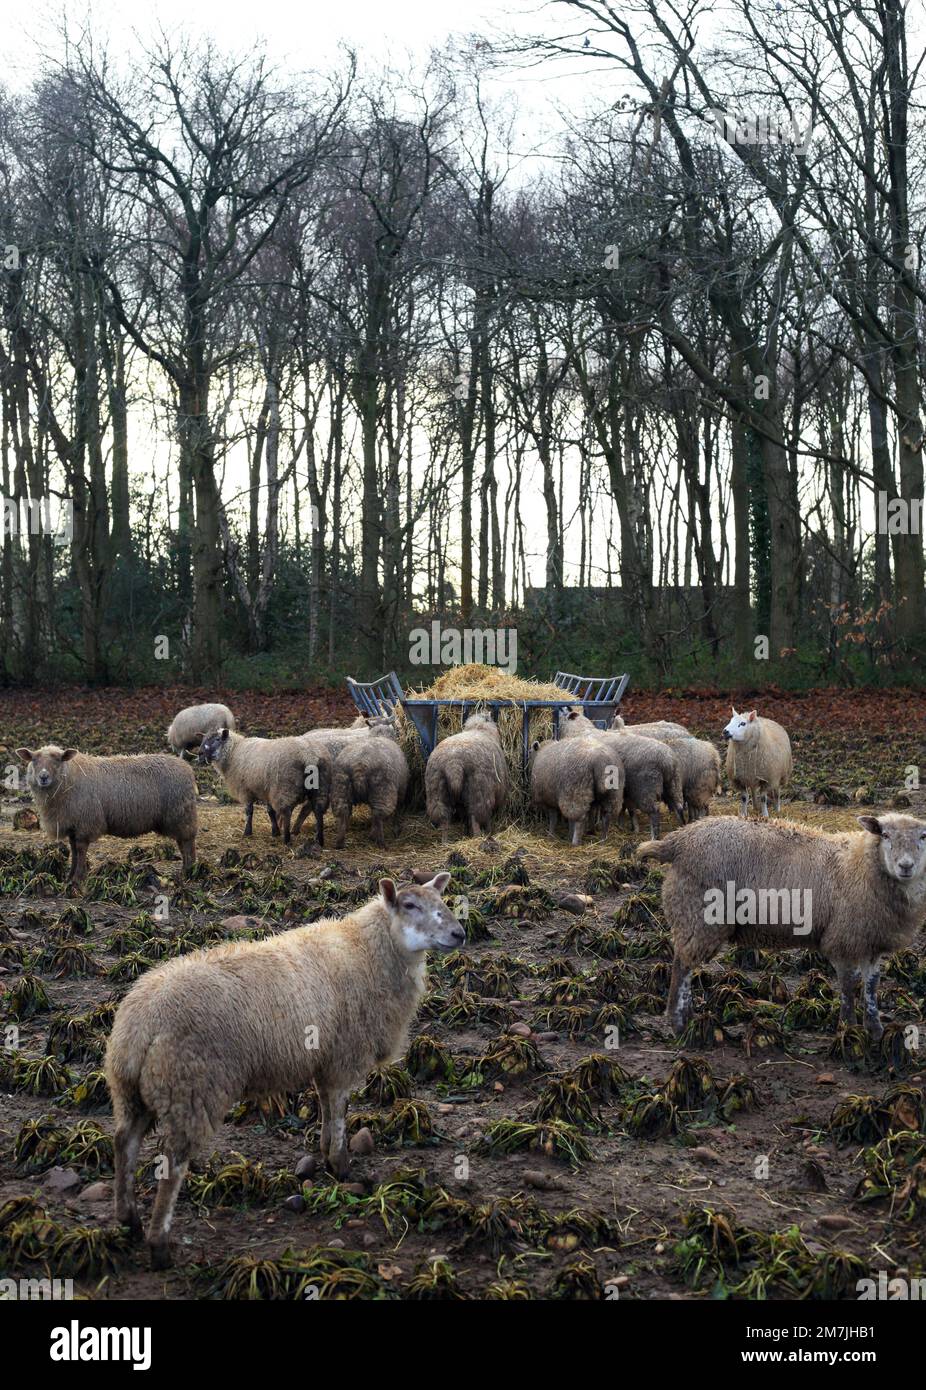 Sheep feeding on hay in winter. Stock Photo